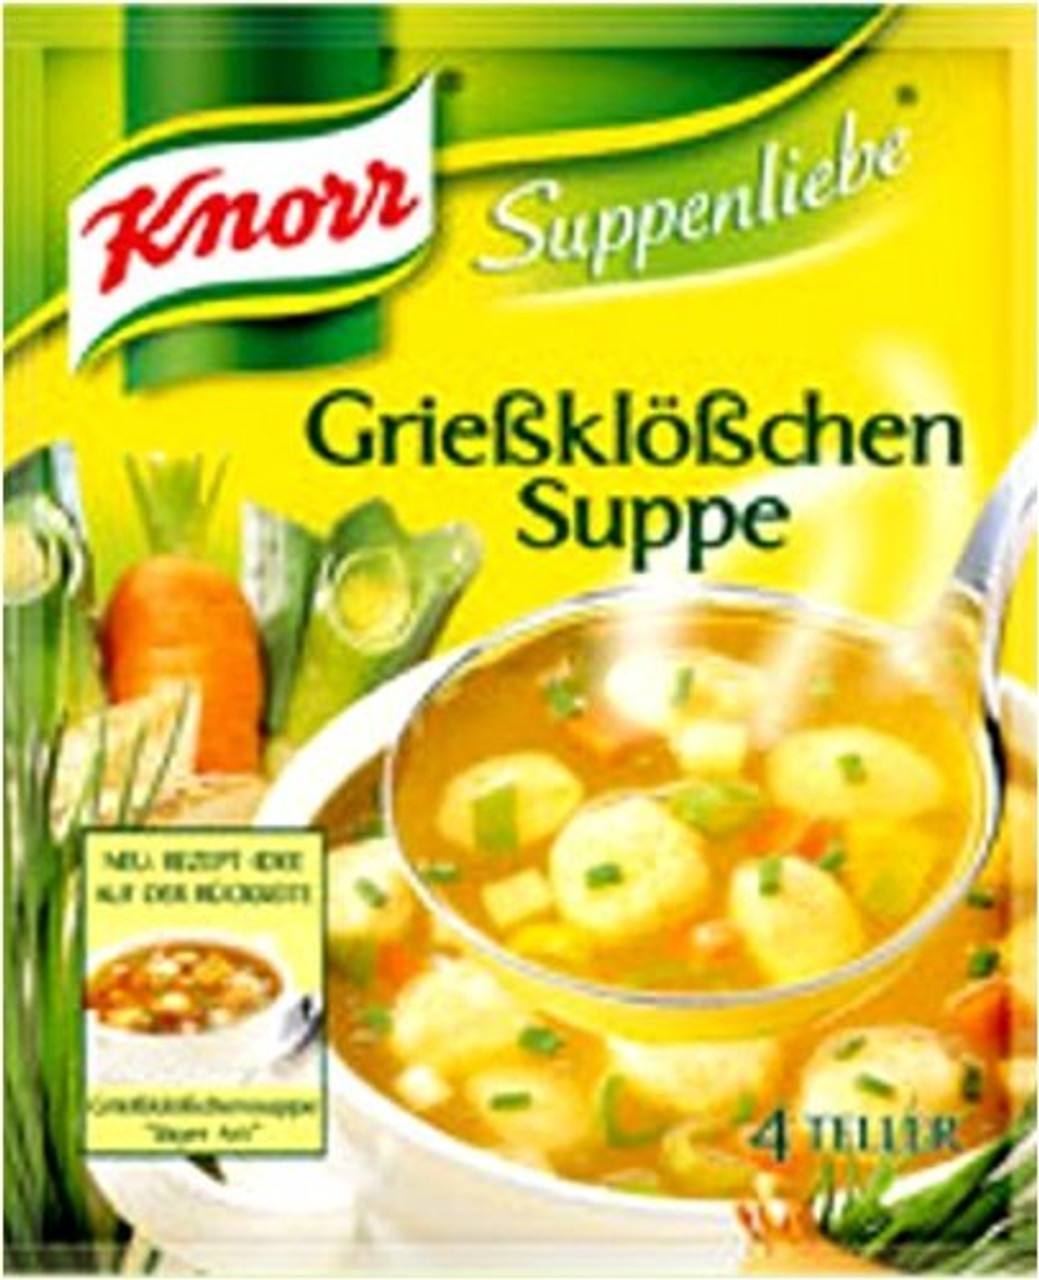 Knorr Soup Suppenliebe Griesskloesschen 16pc #13222 ...